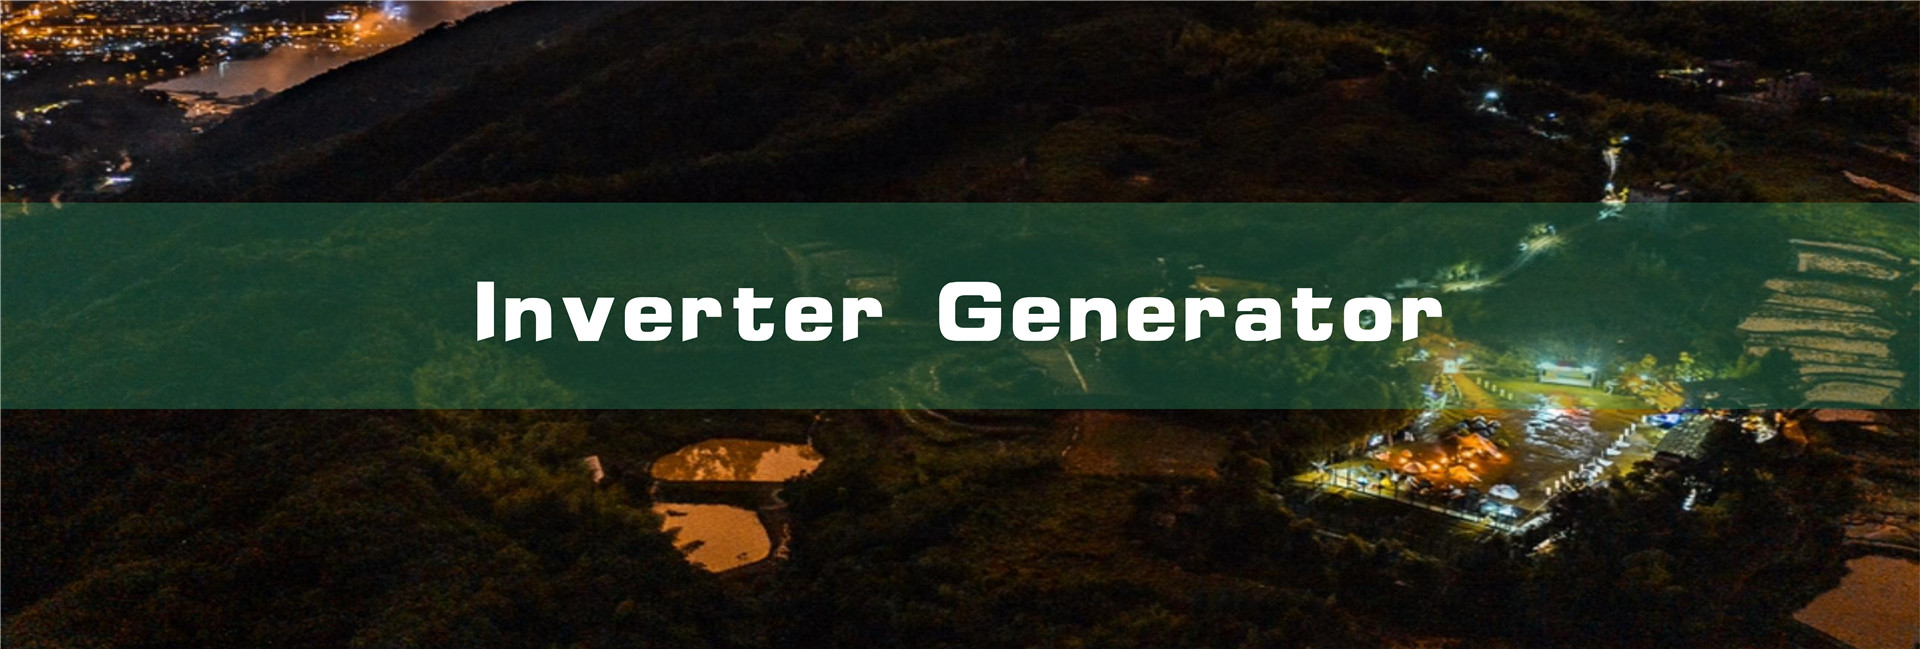 Home Use Generator